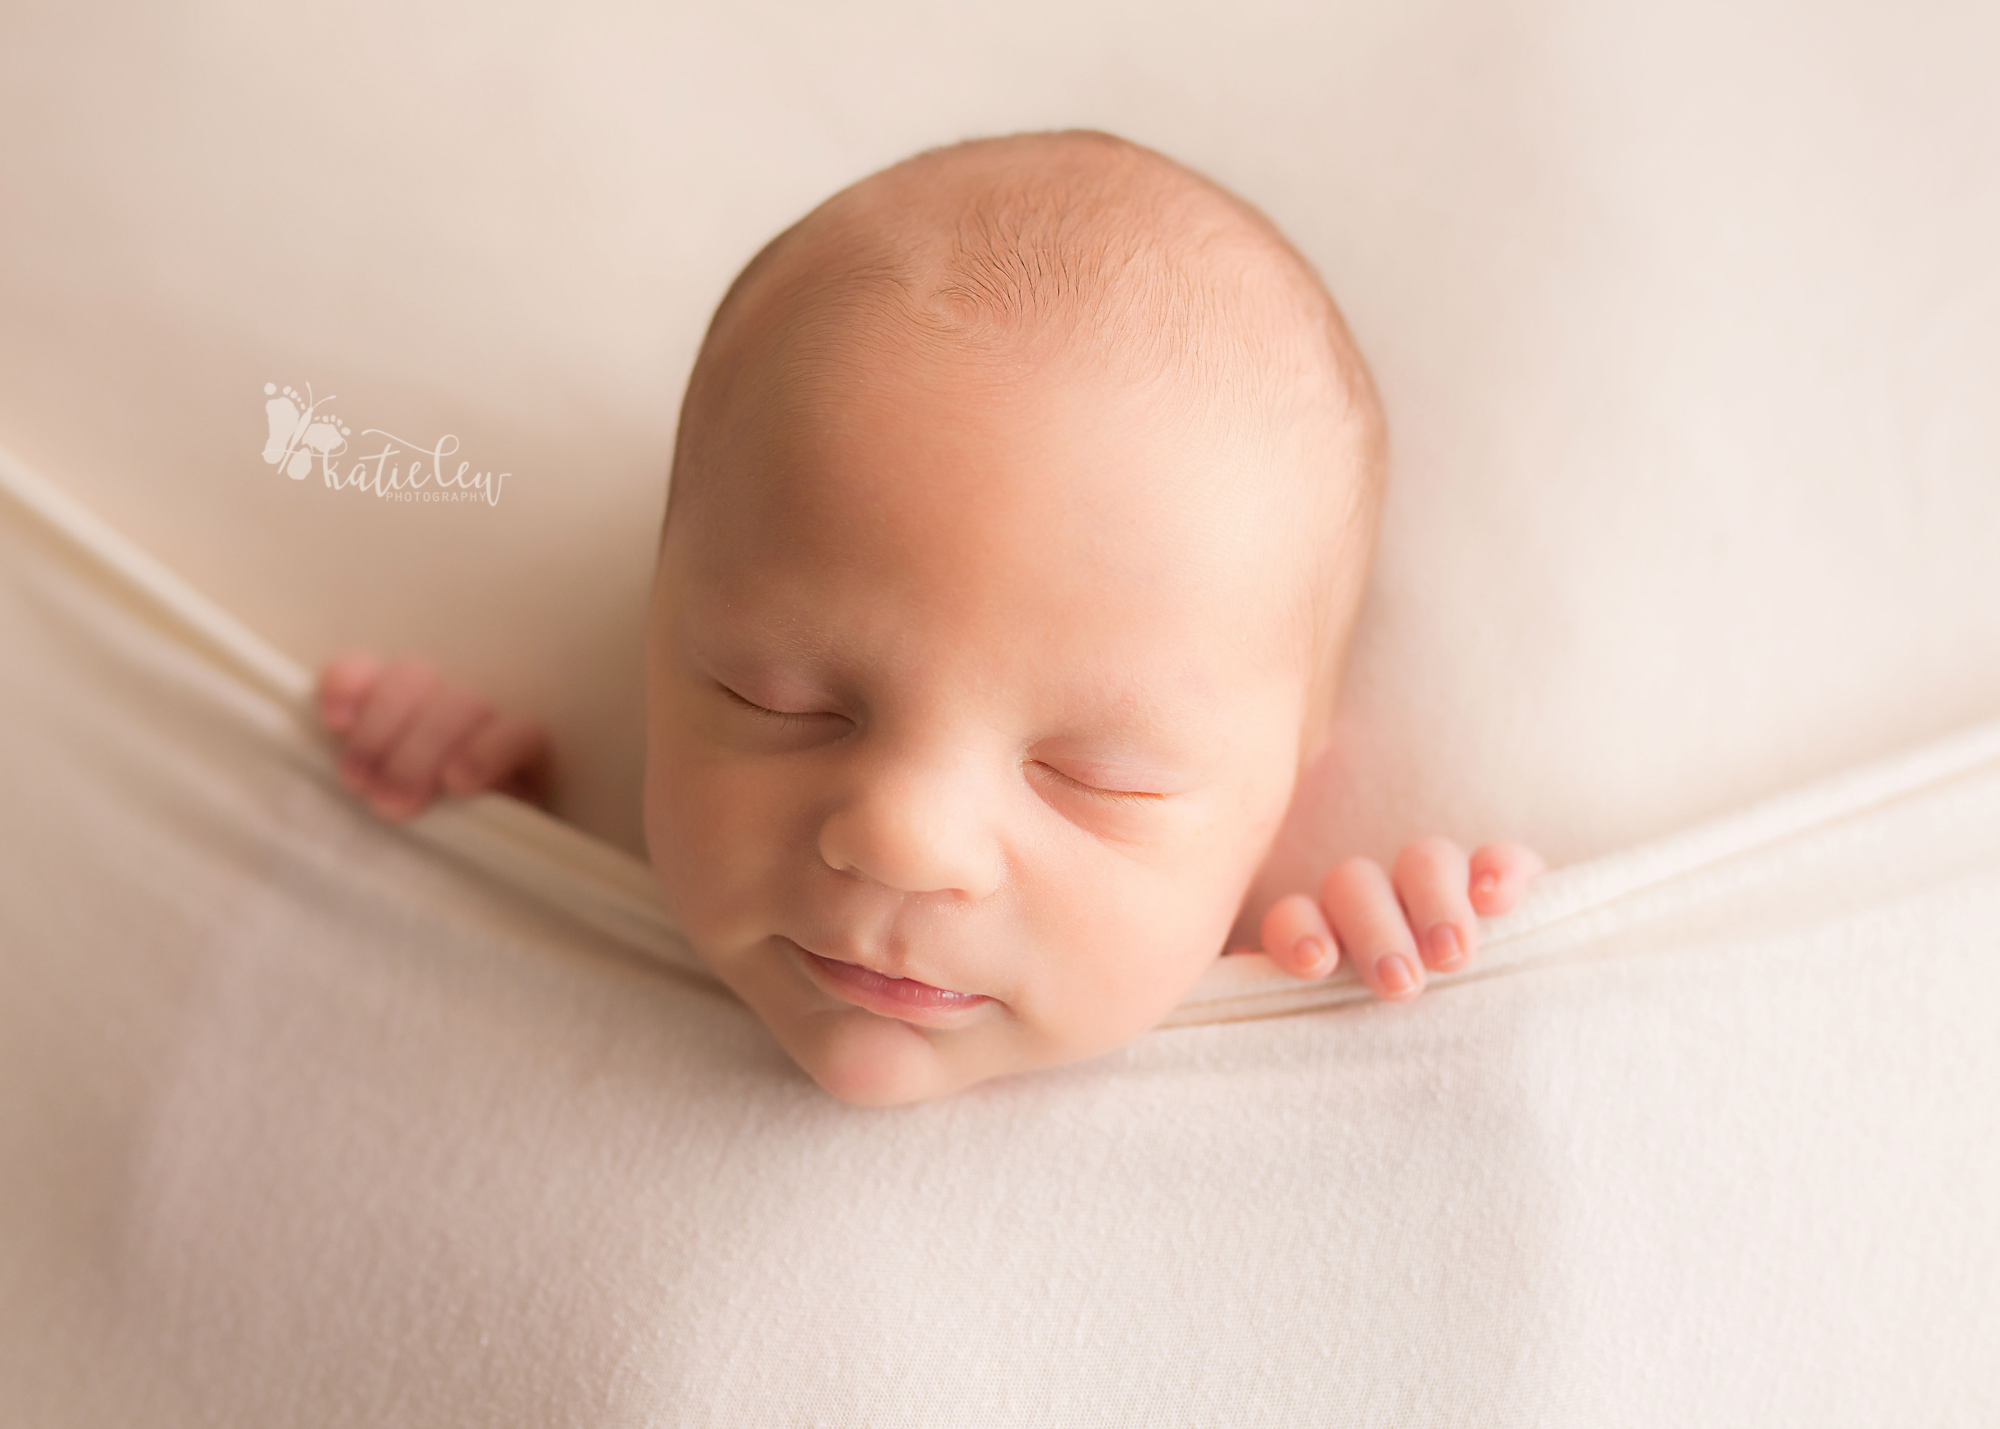 sweet newborn boy all tucked in against a cream background